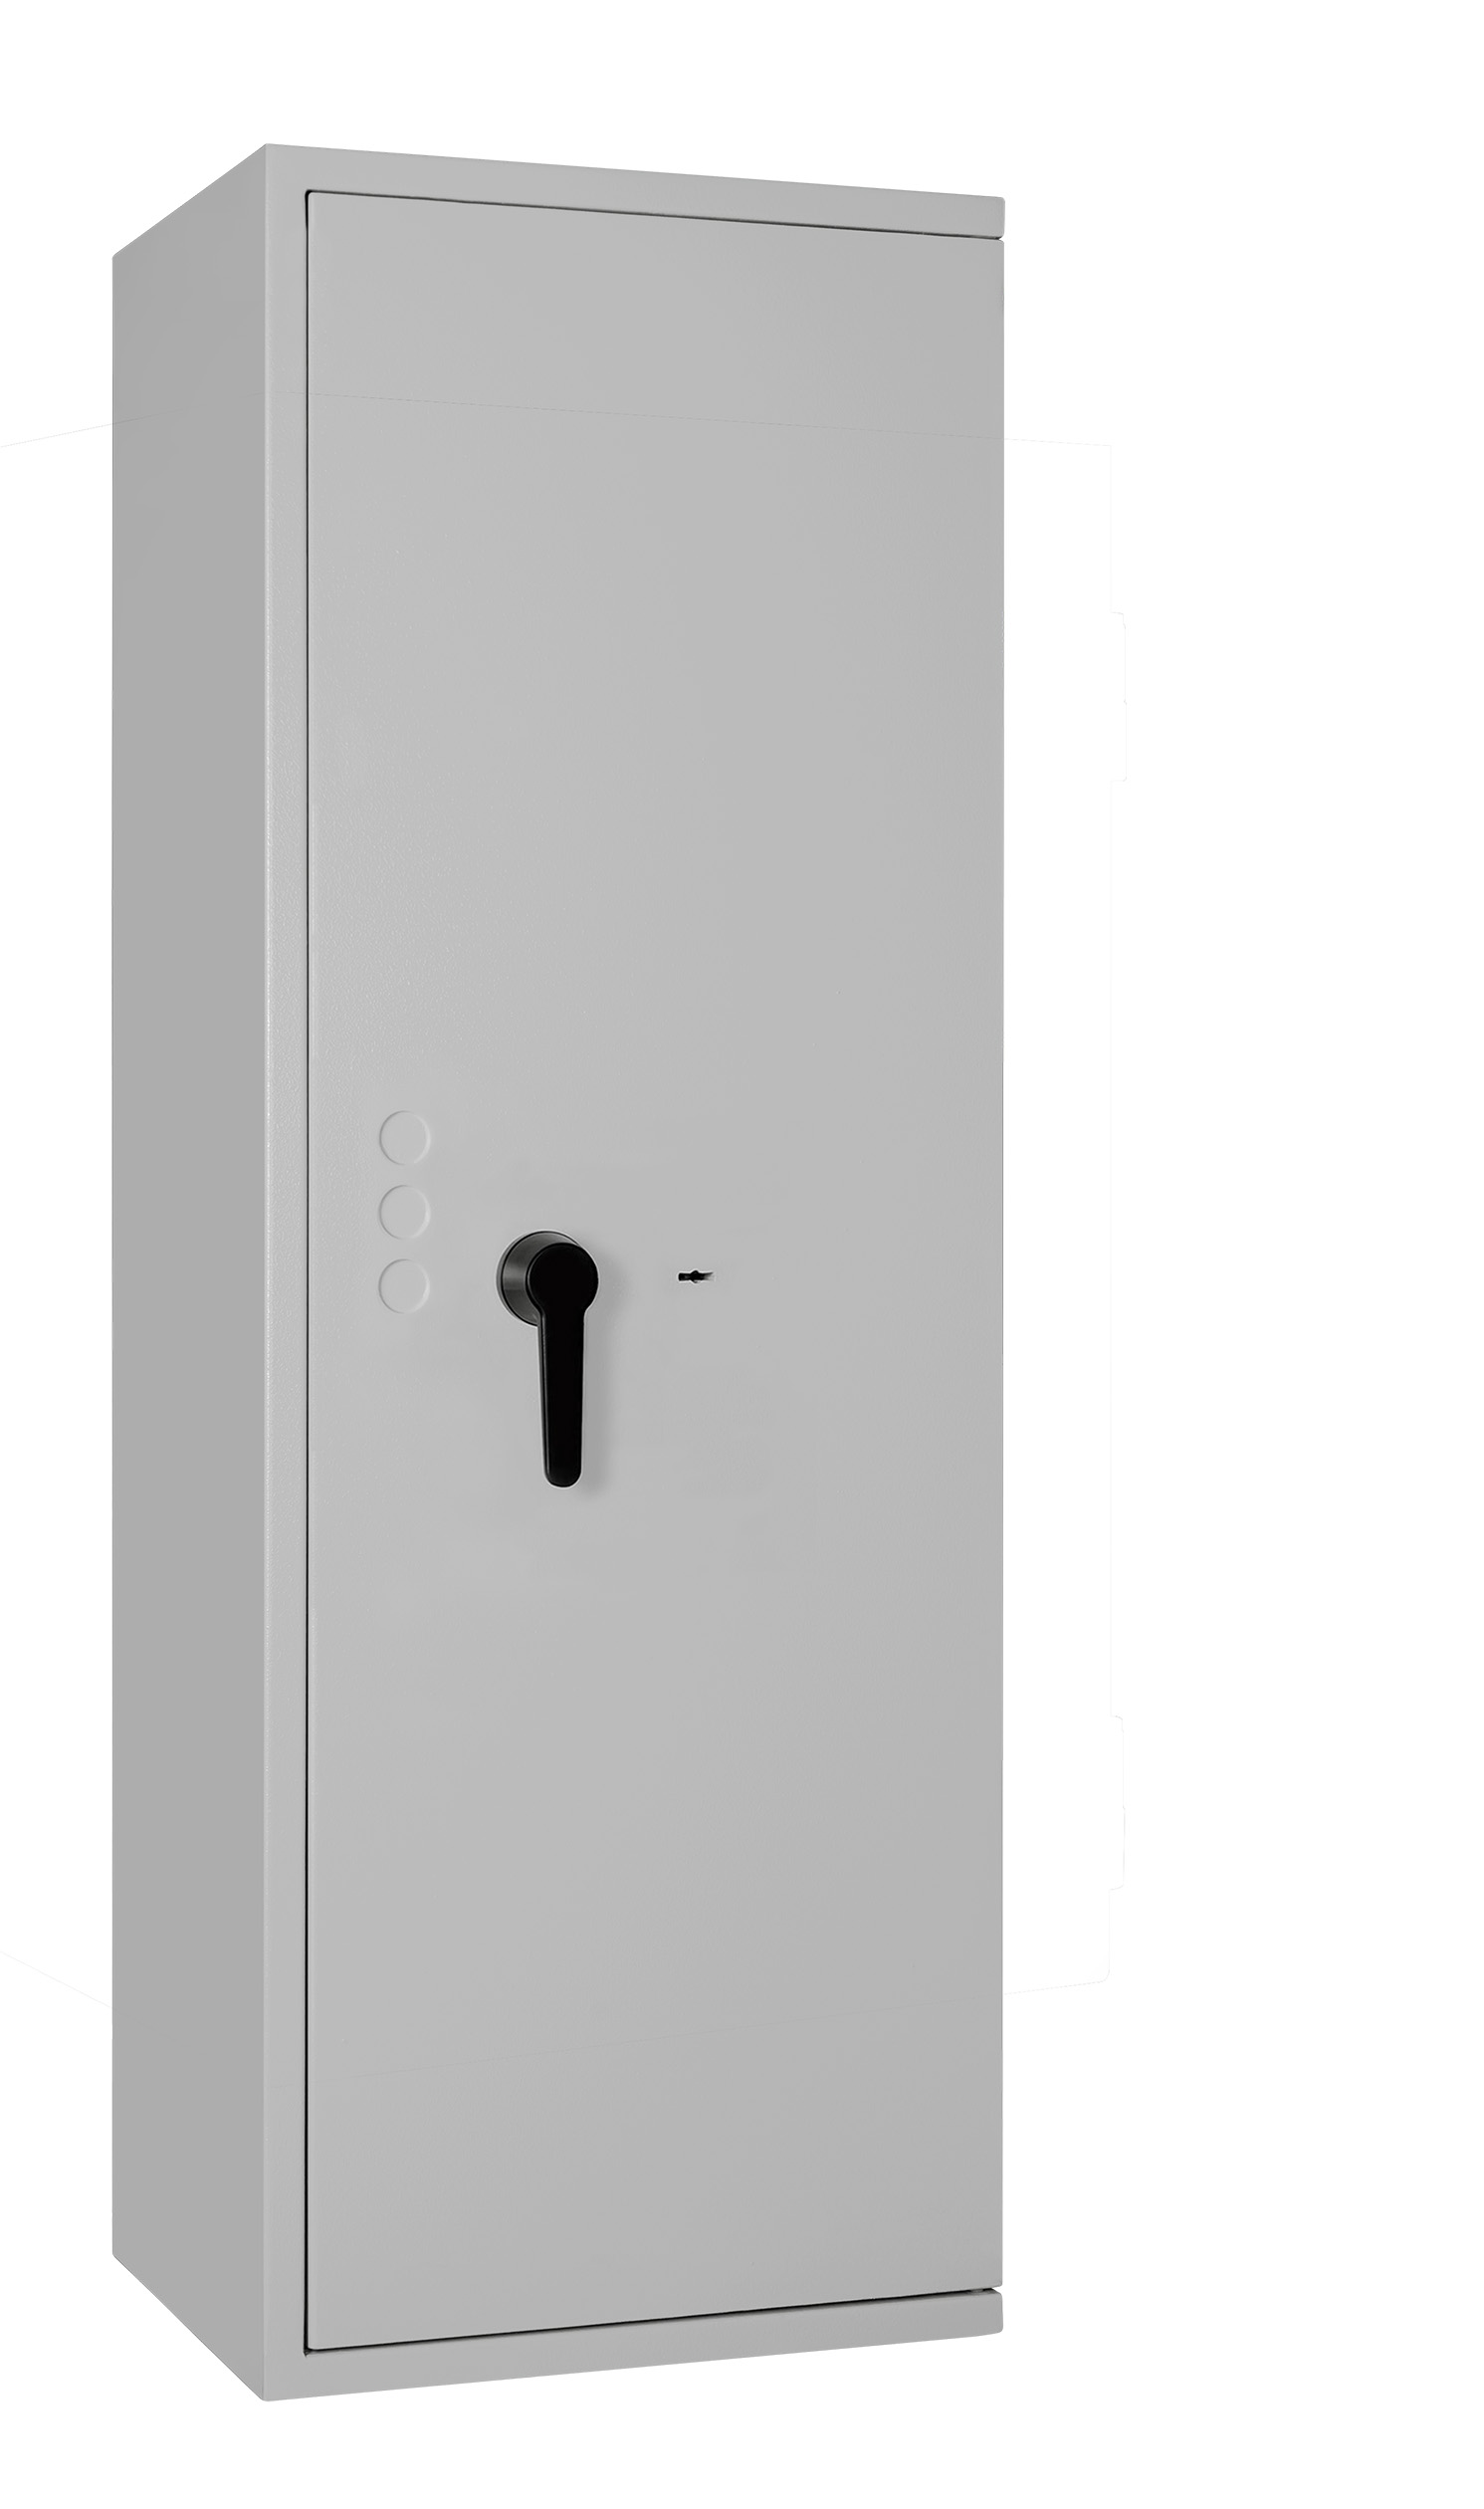 Format Schlüsseltresor - Wertschutzschrank Kombischrank EN 1143-1 Klasse 1 Serie STC